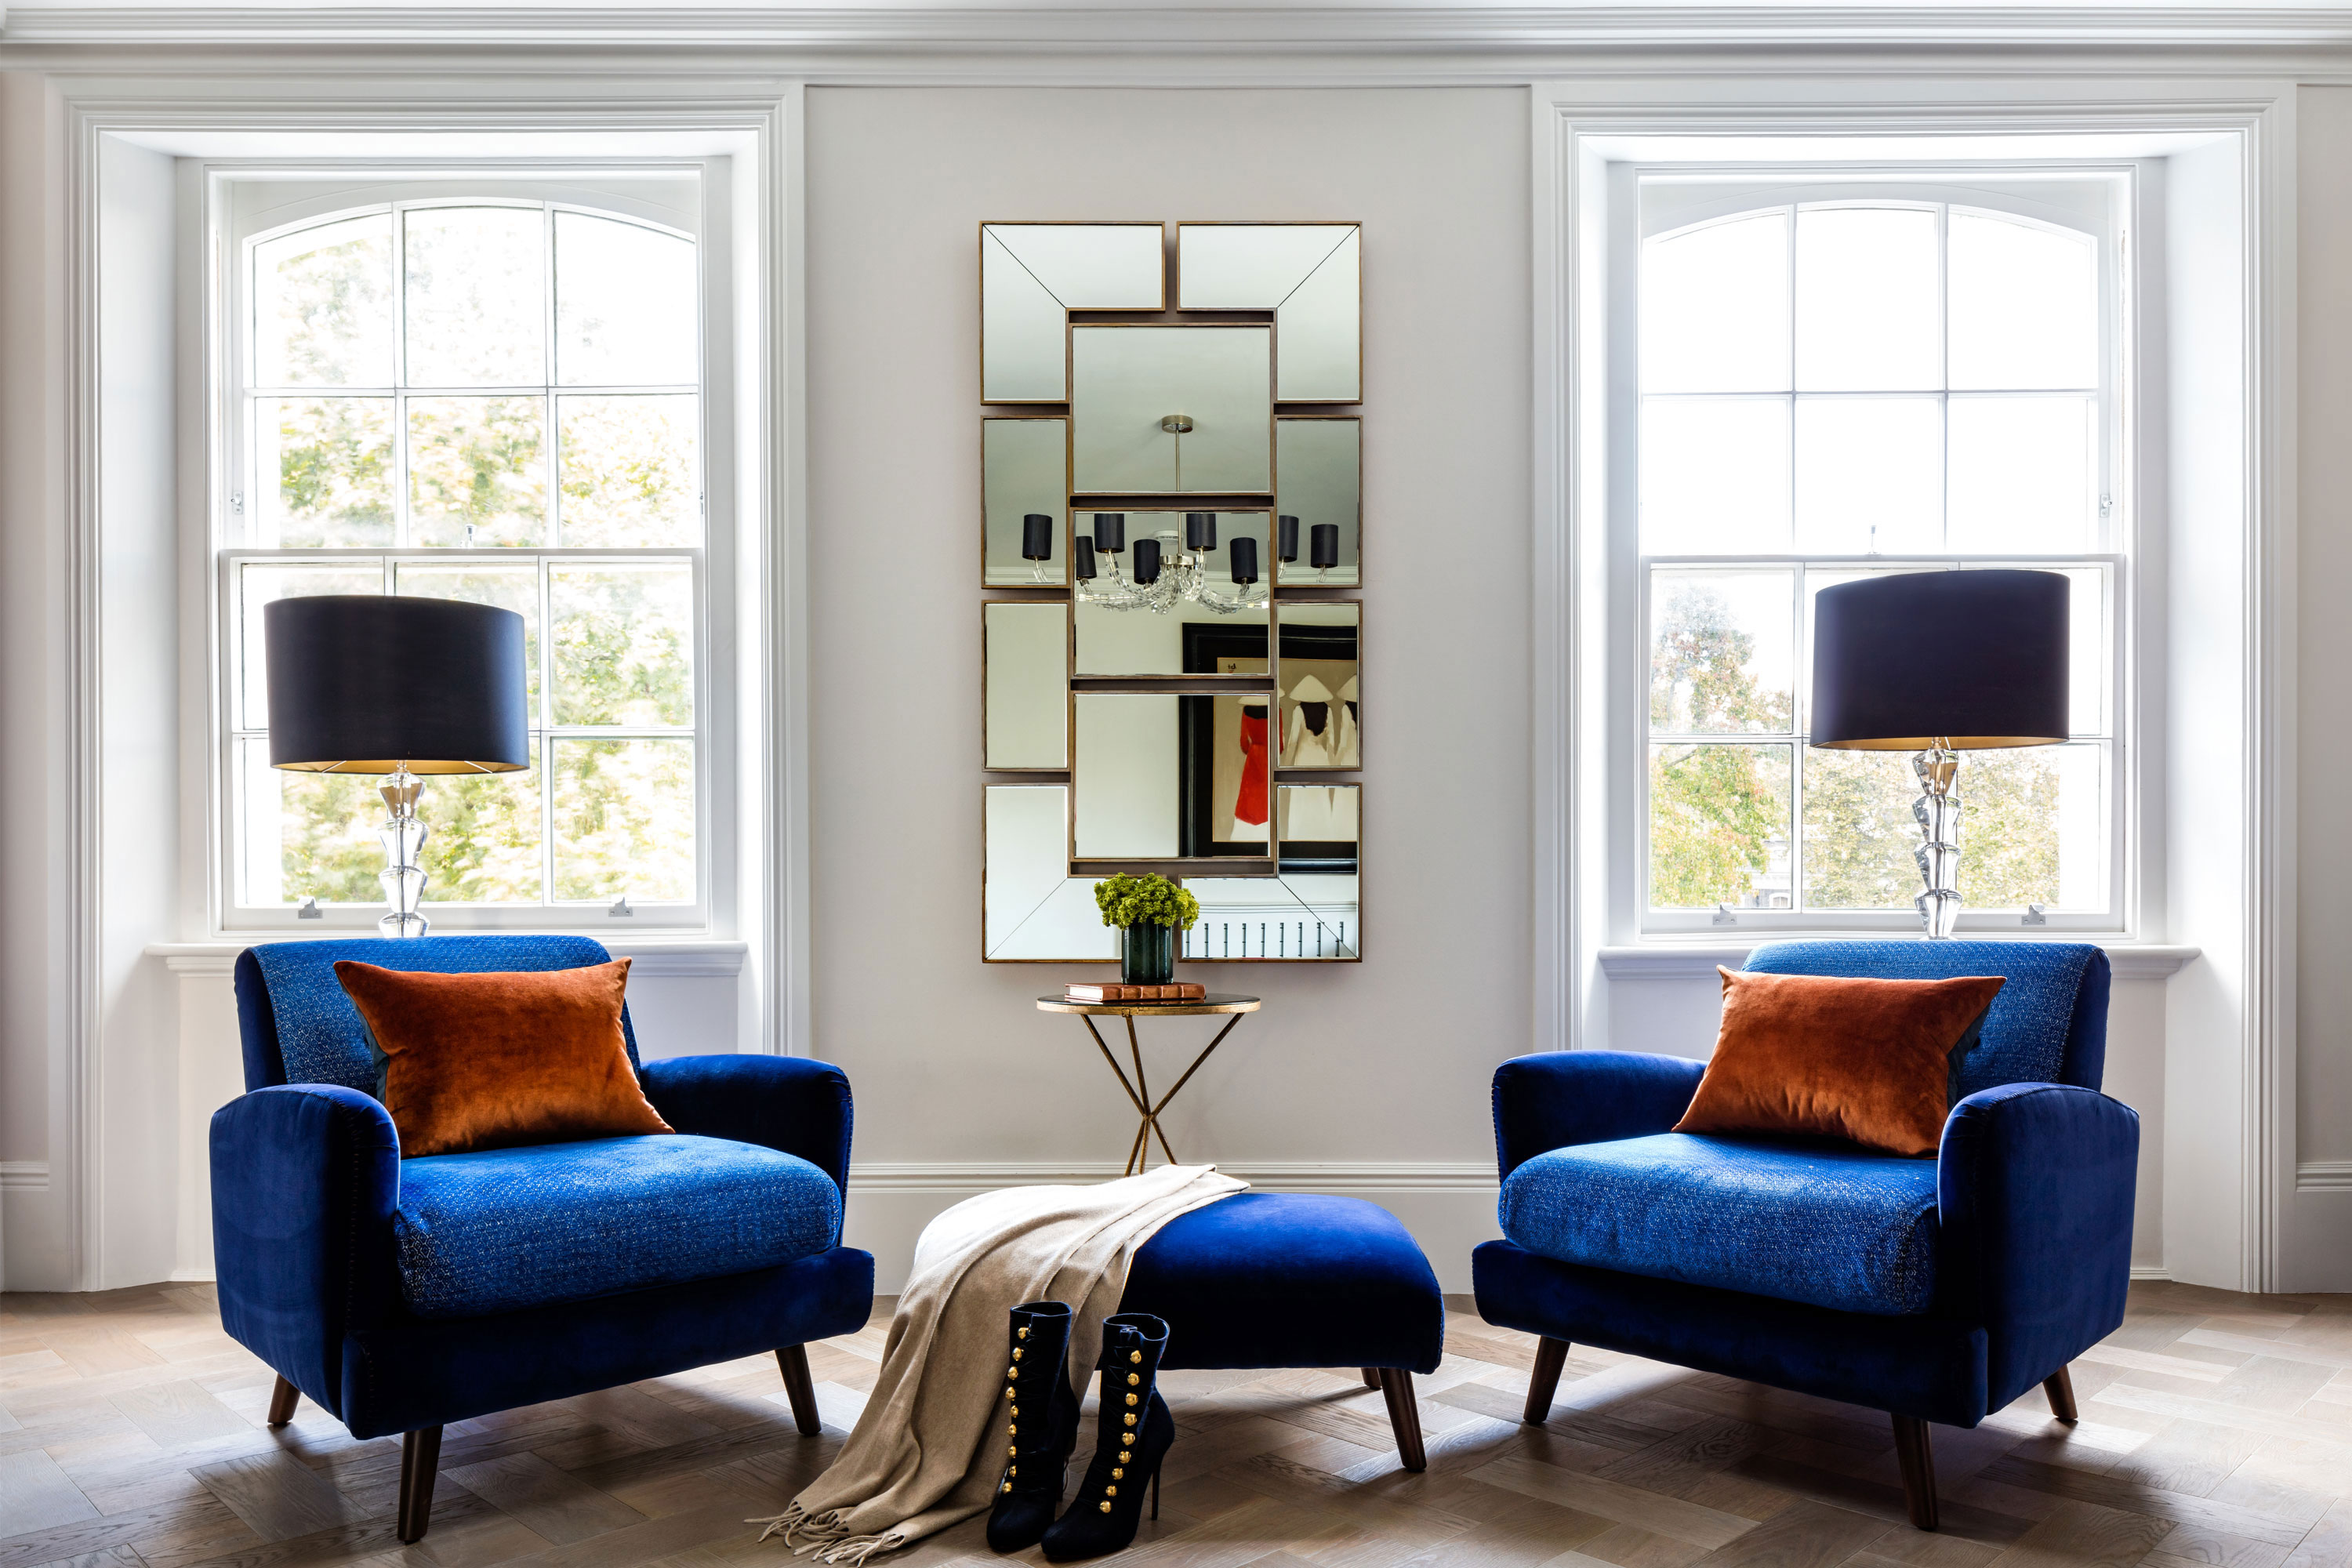 Elegant interior, rich blue chairs, classic symmetry